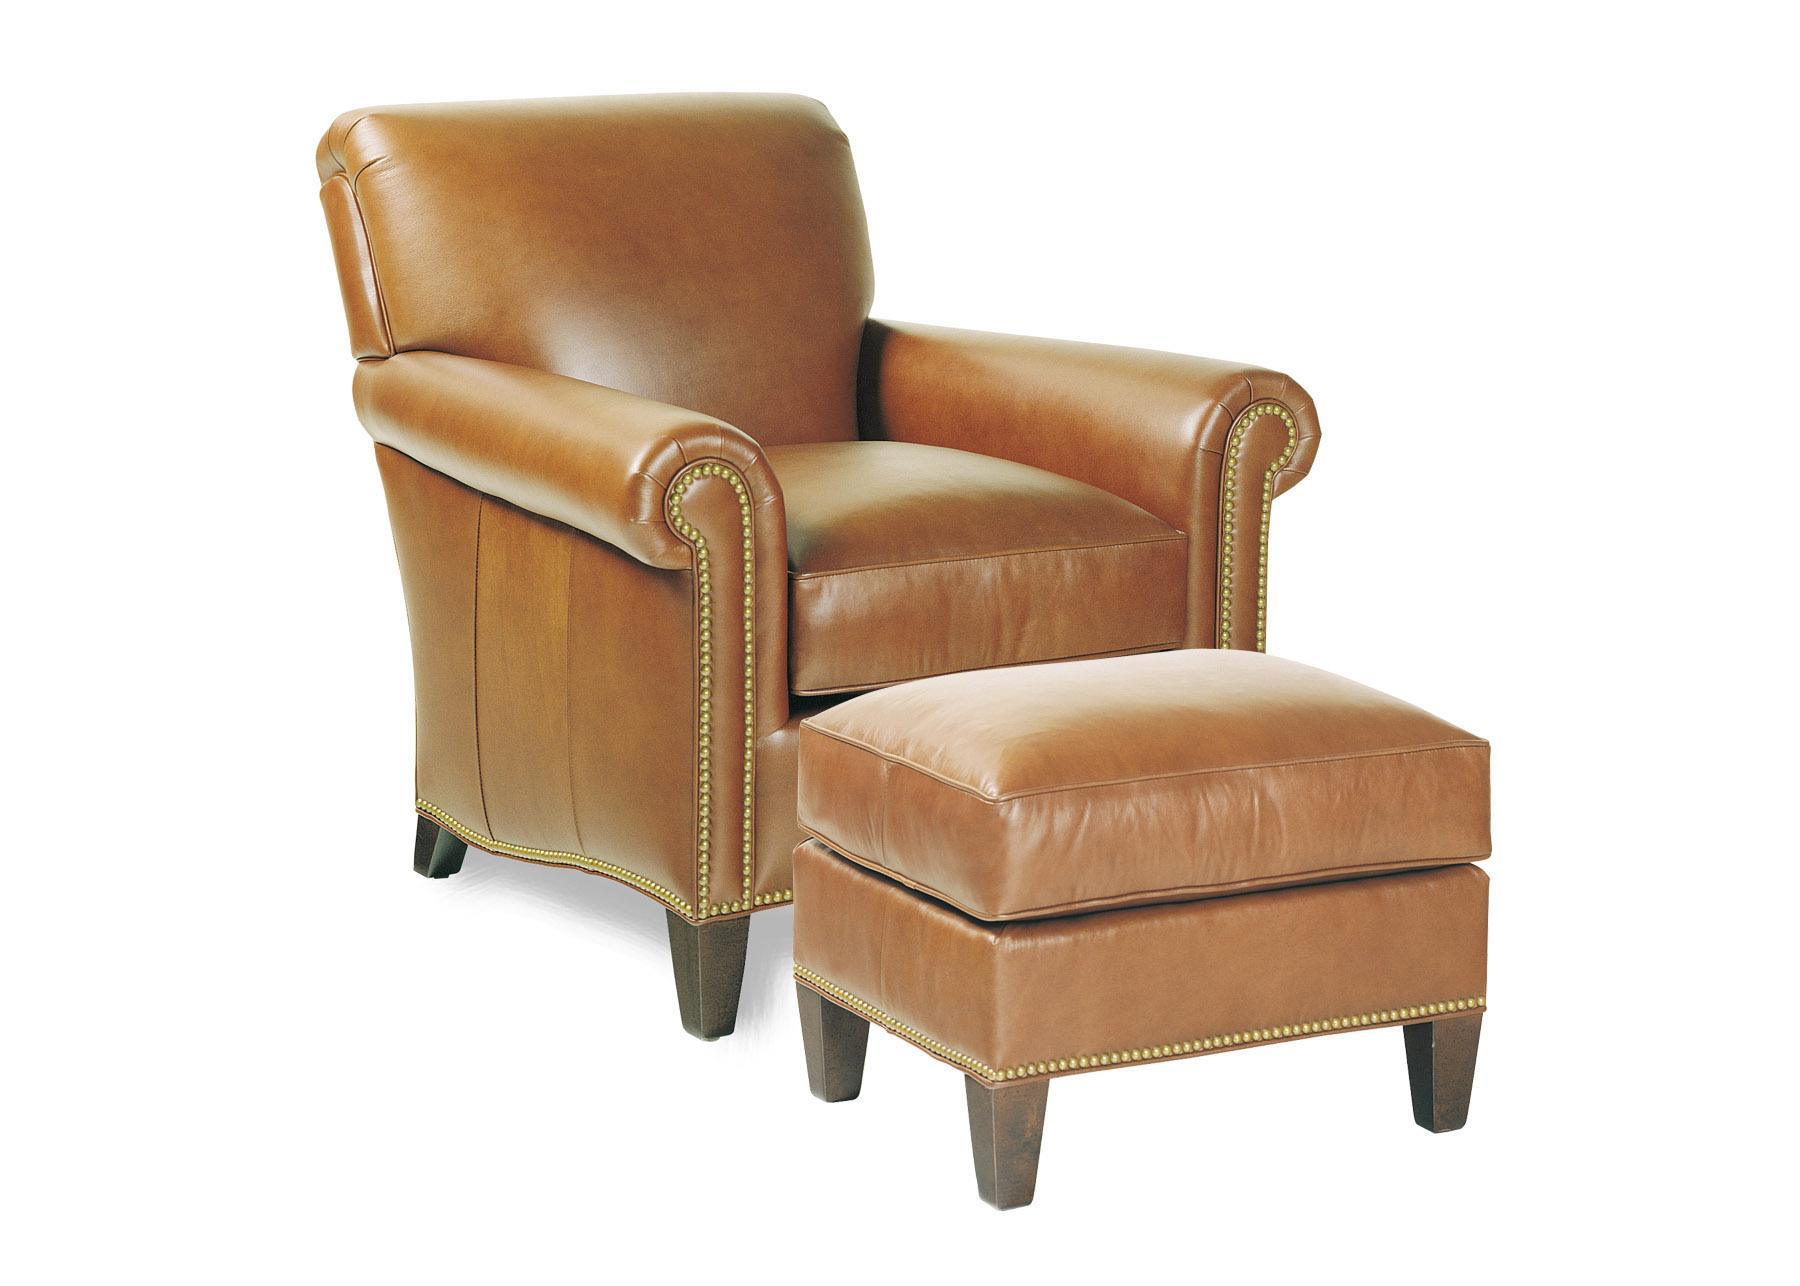 Cabot Wrenn Legends Studio Lounge Chair